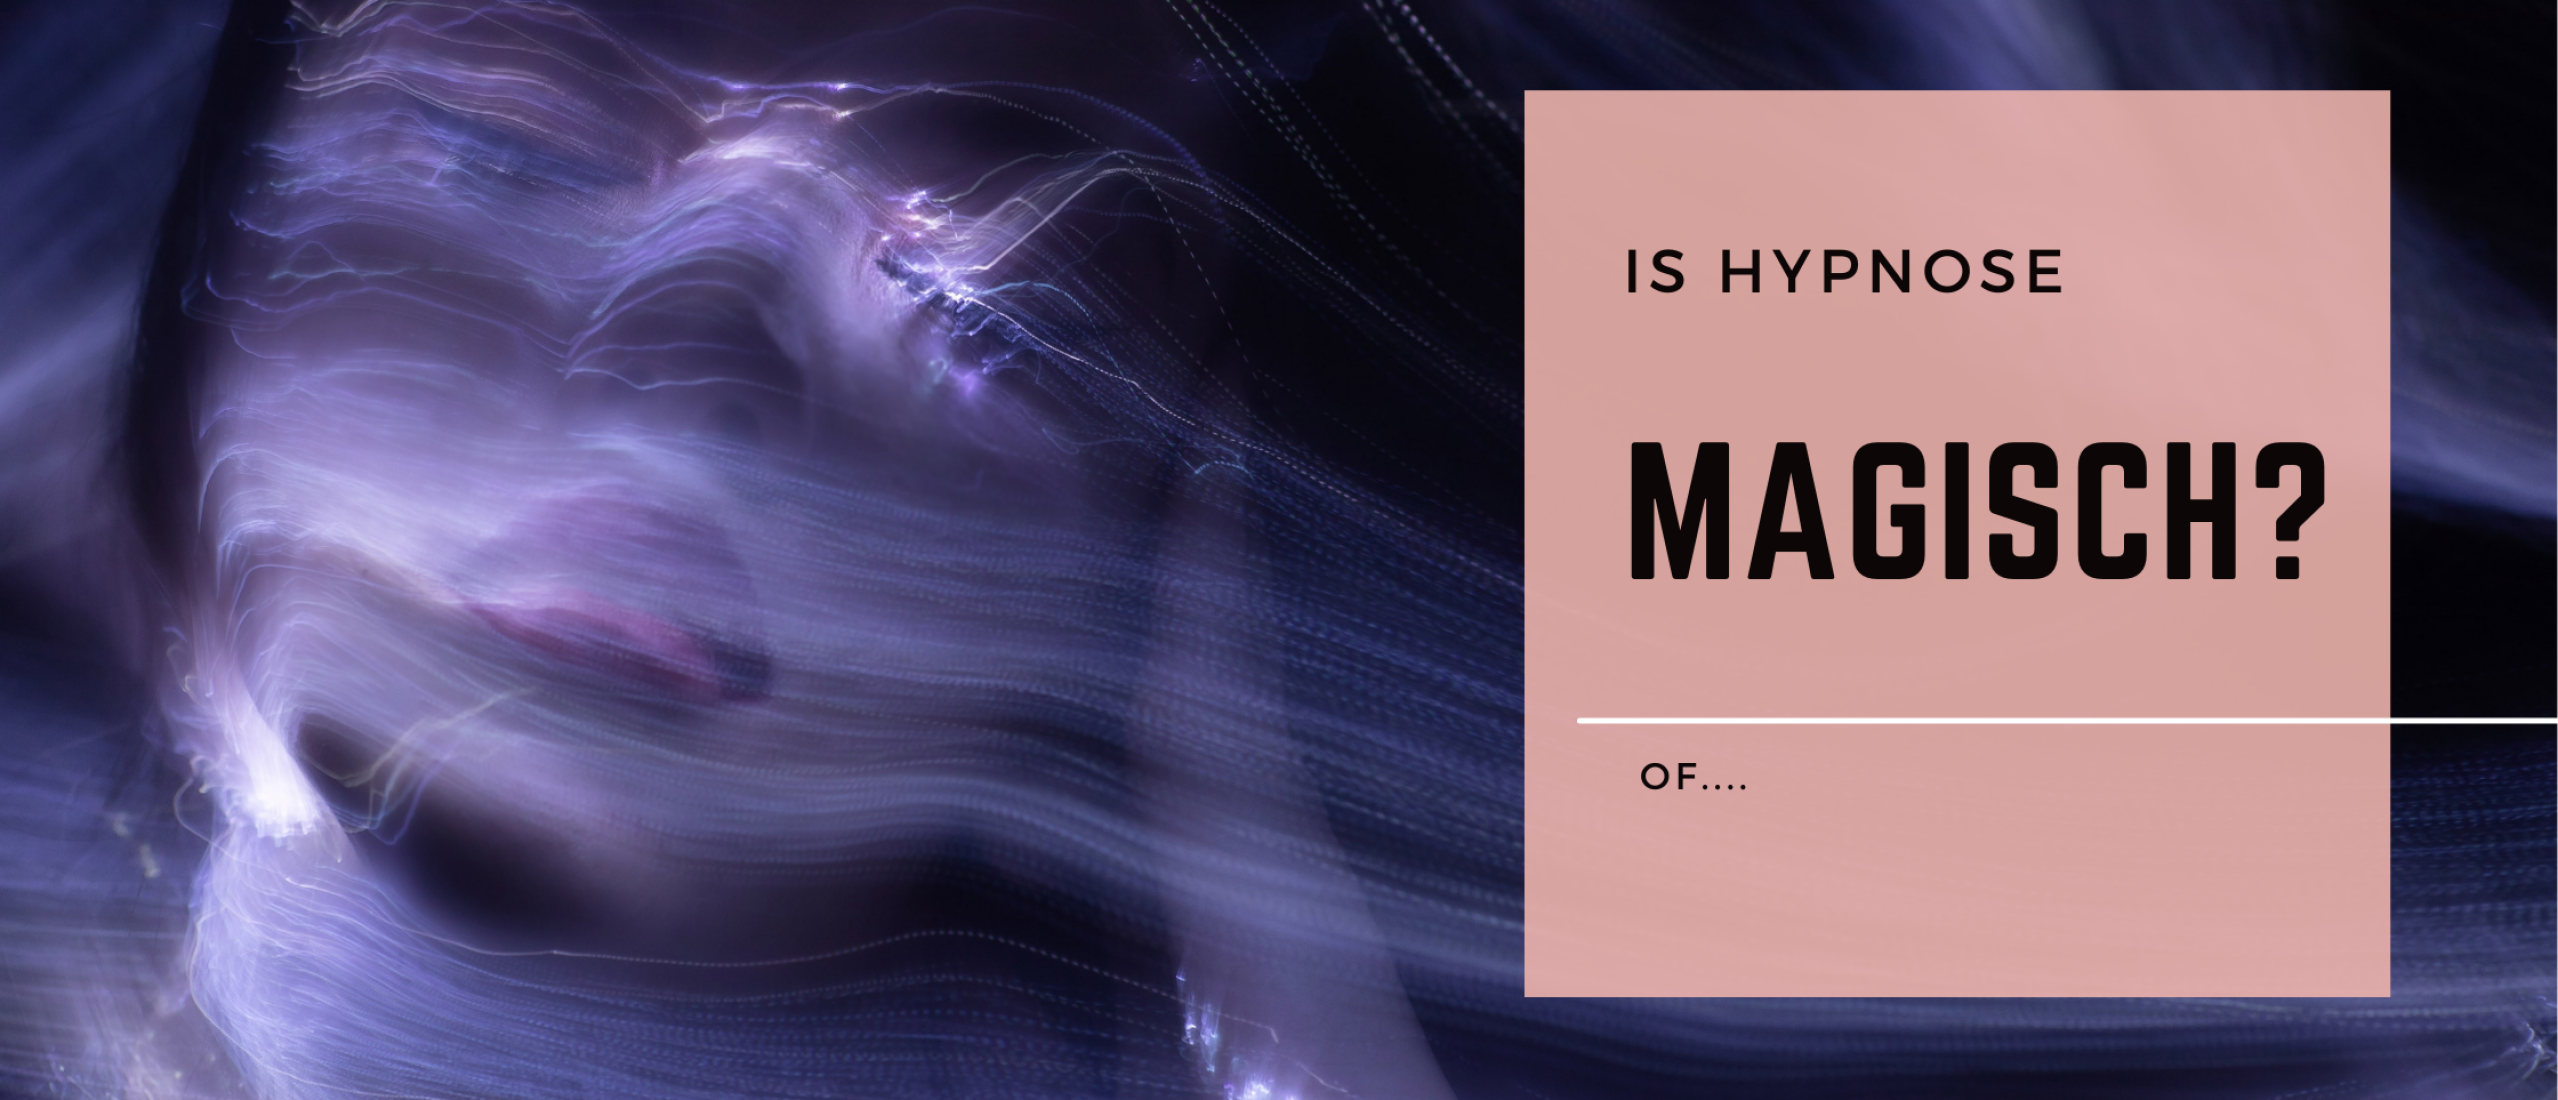 Is hypnose magisch?